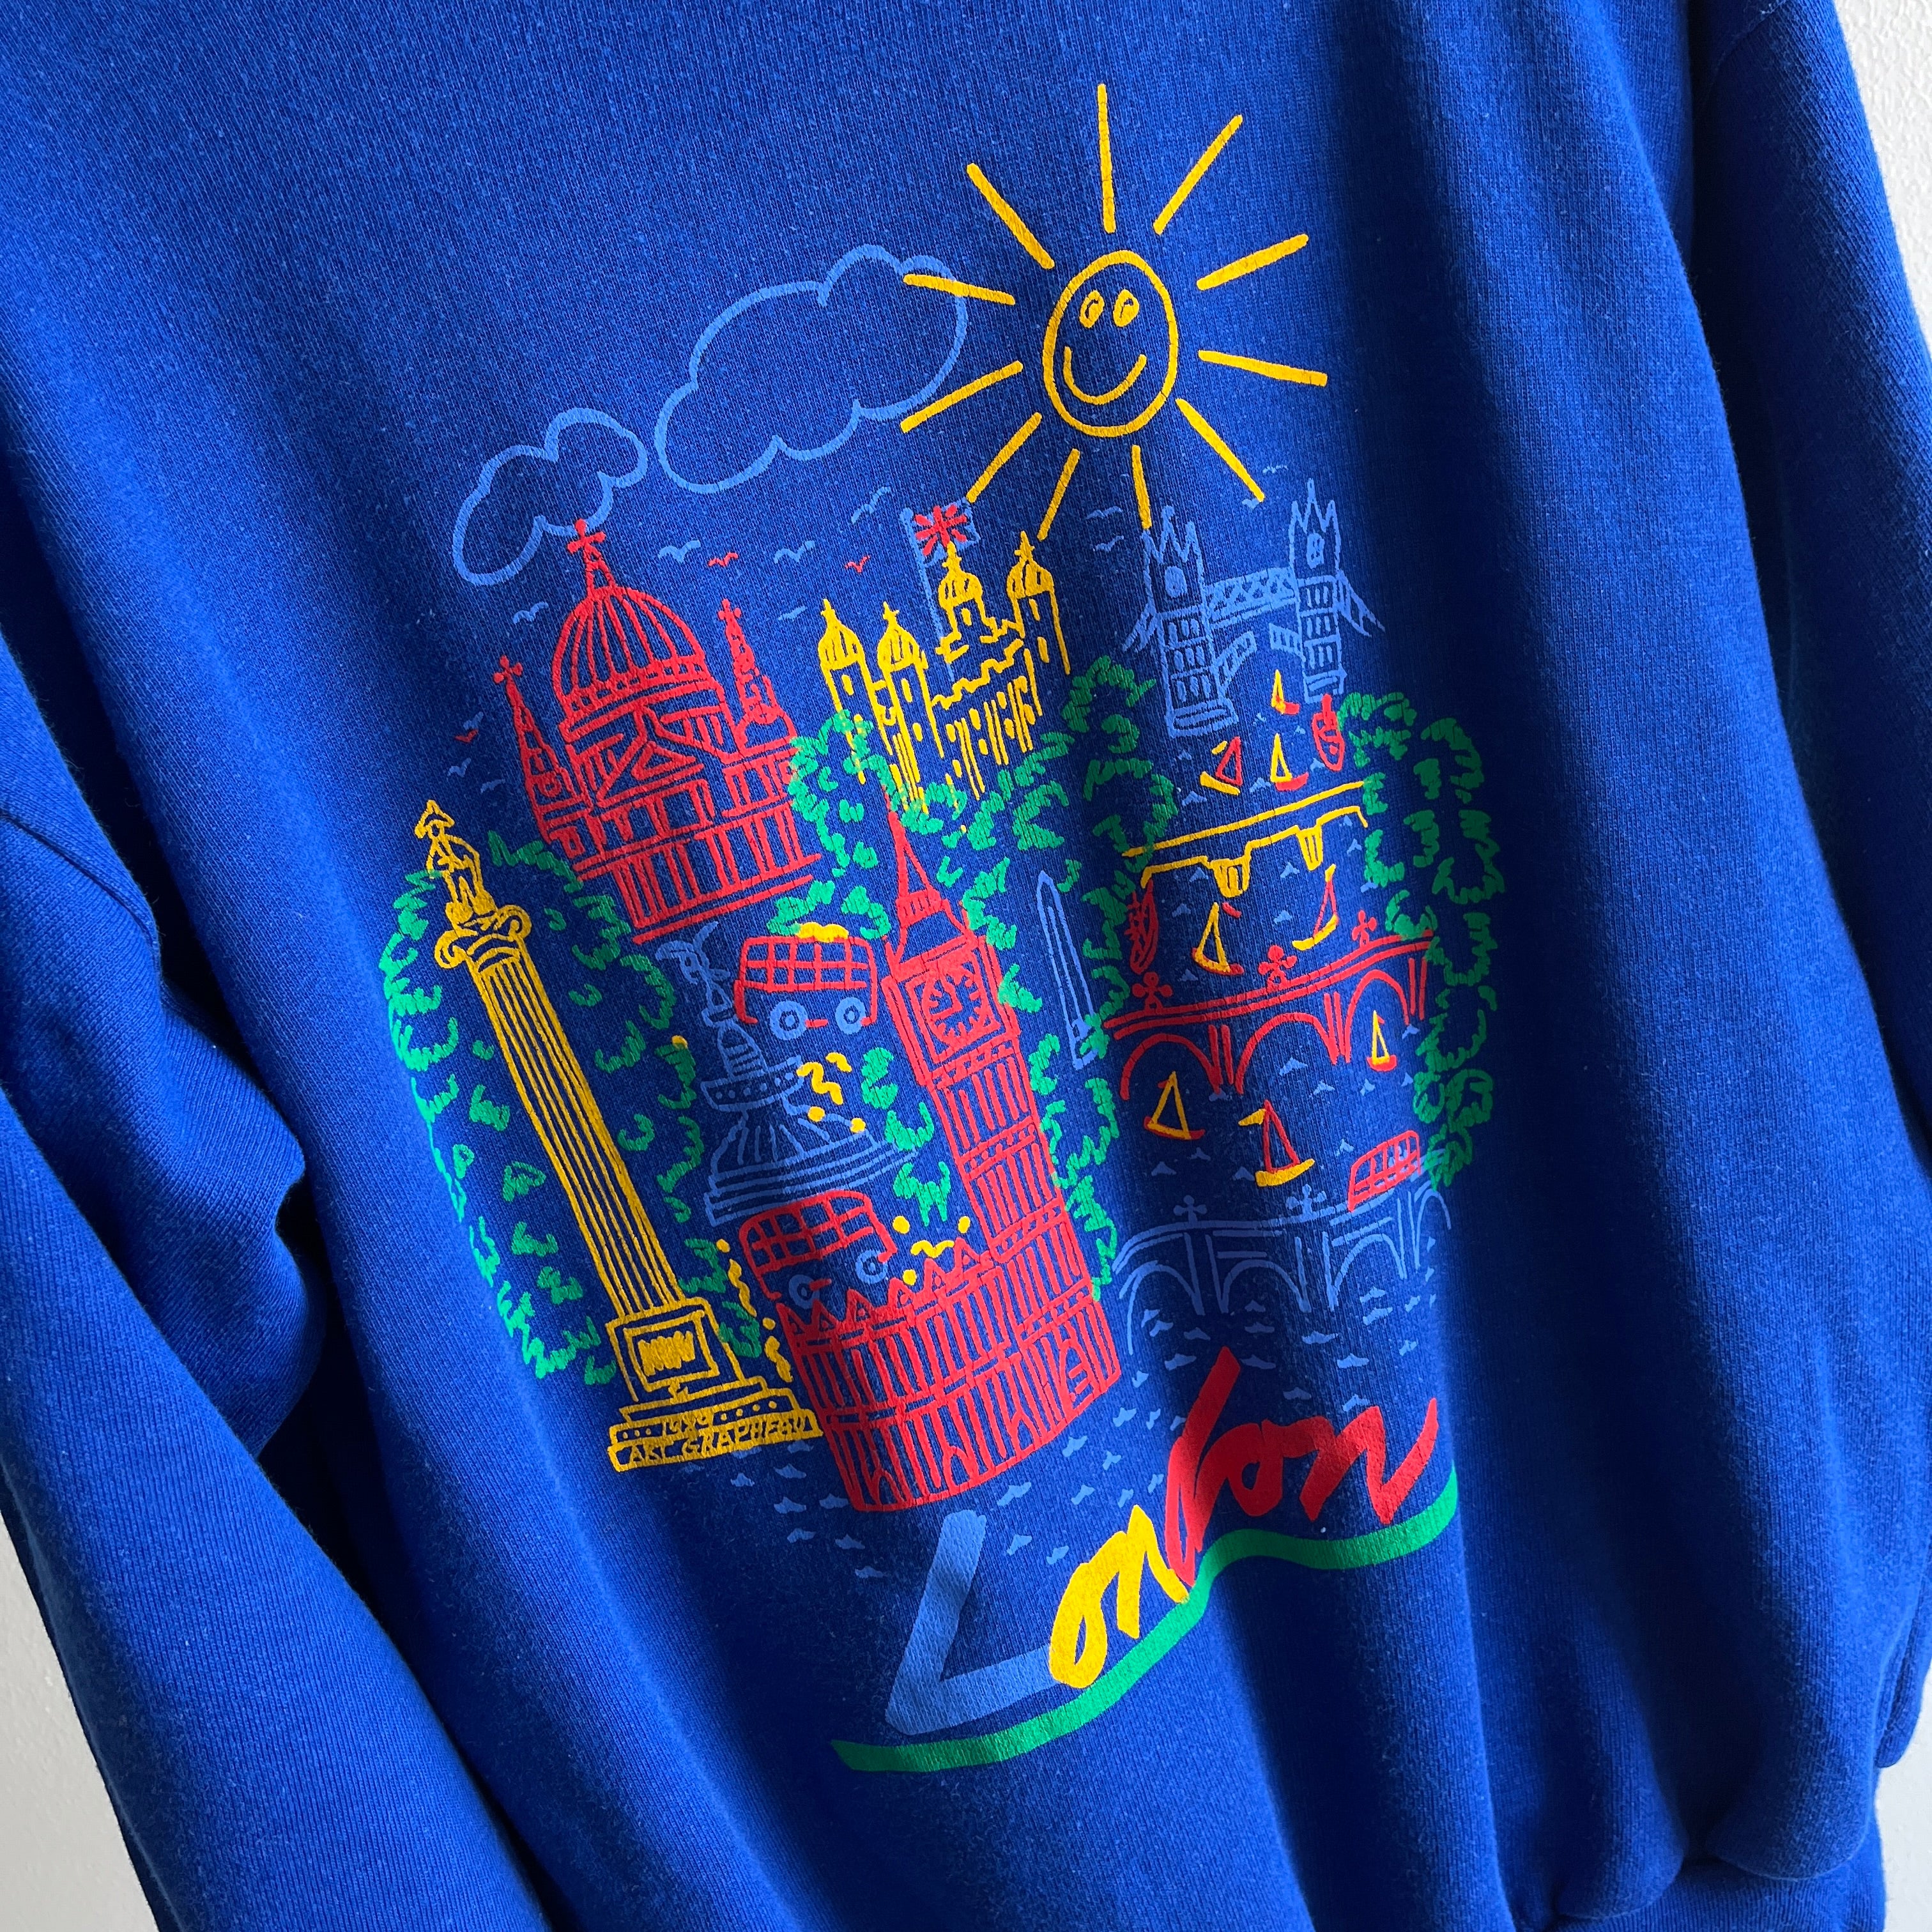 1989 London Tourist Sweatshirt - Fabriqué en Angleterre !